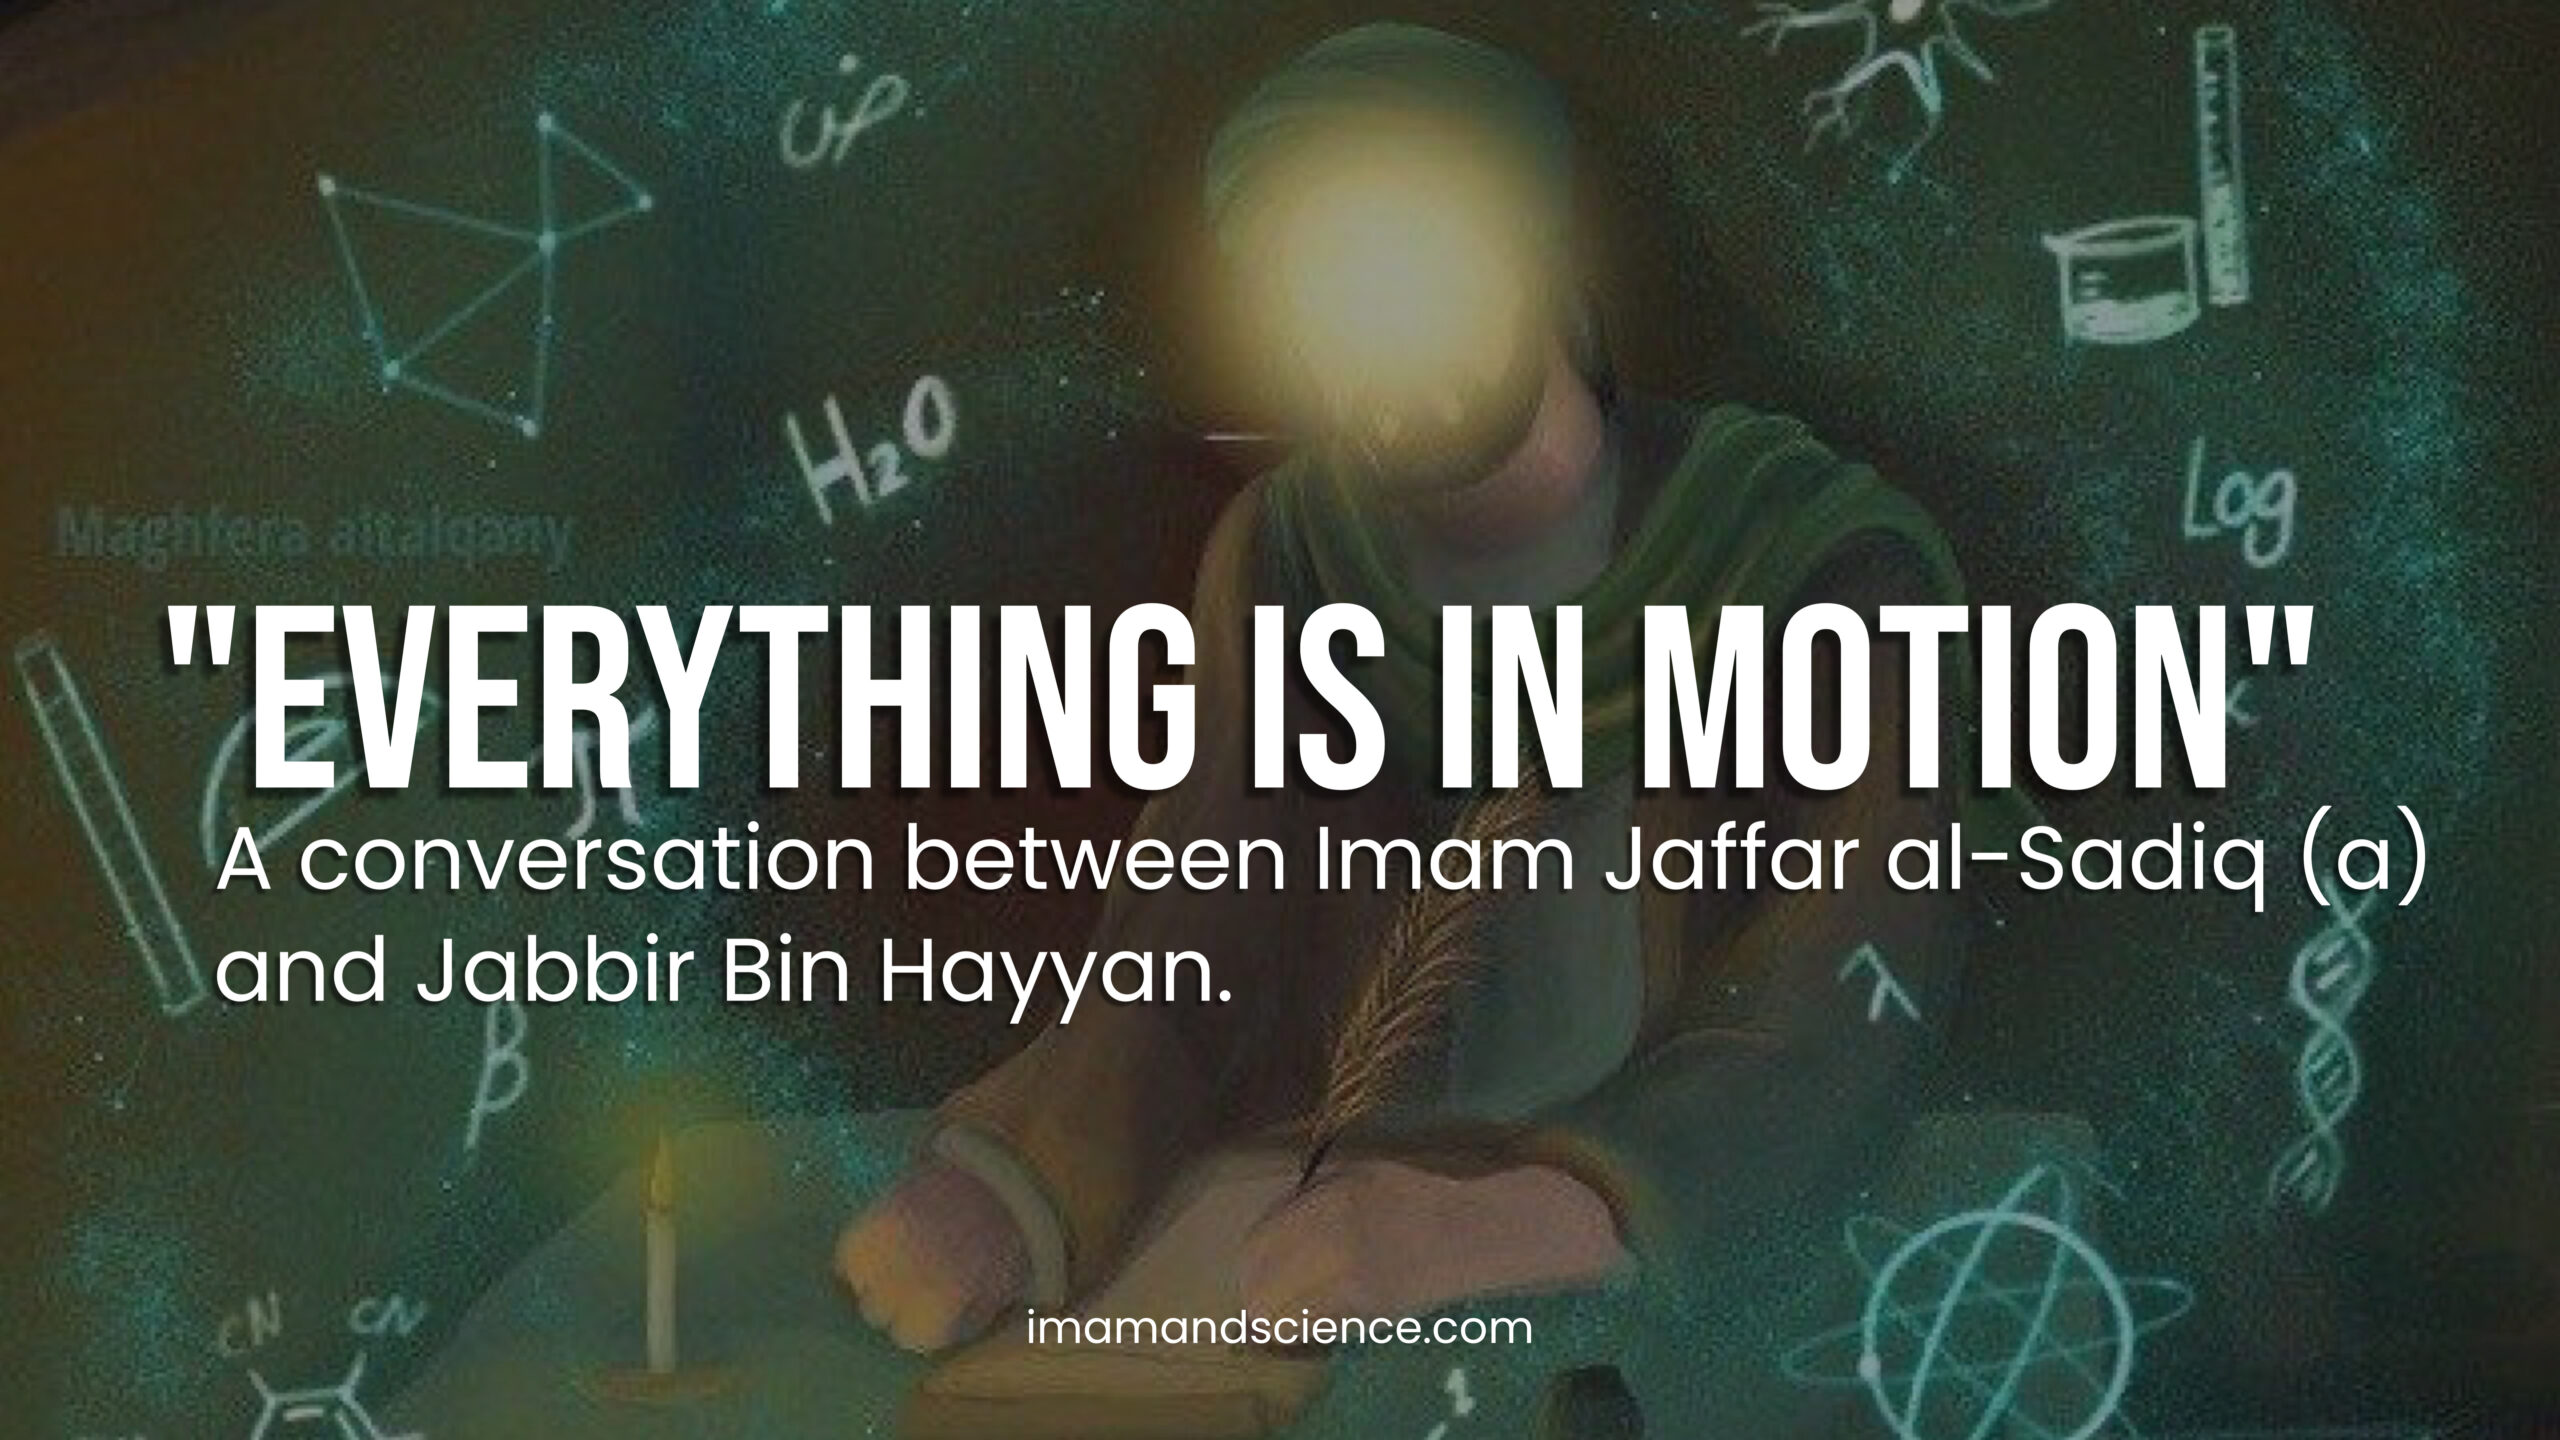 Everything is in motion: A conversation between Imam Jaffar al-Sadiq and Jabbir Bin Hayyan